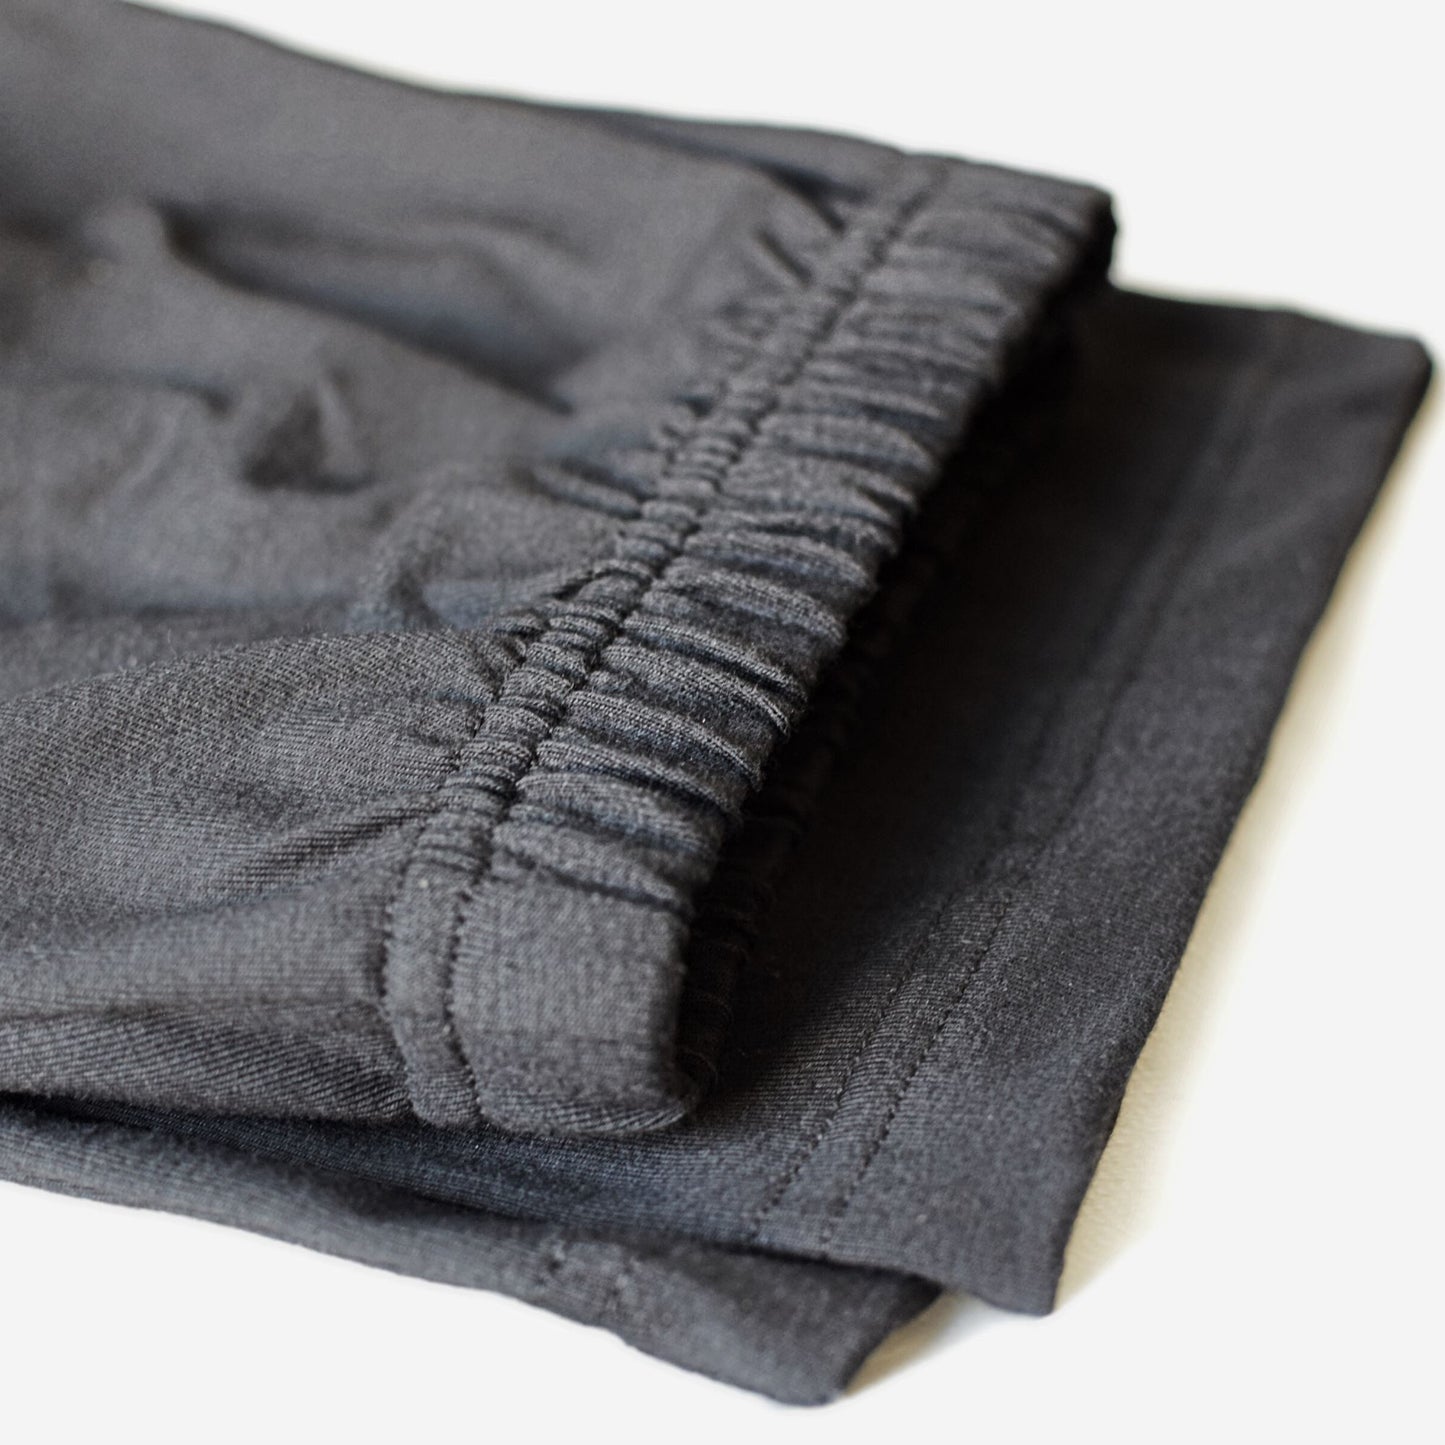 Folded straight leg cotton pants with non-roll elastic waist.